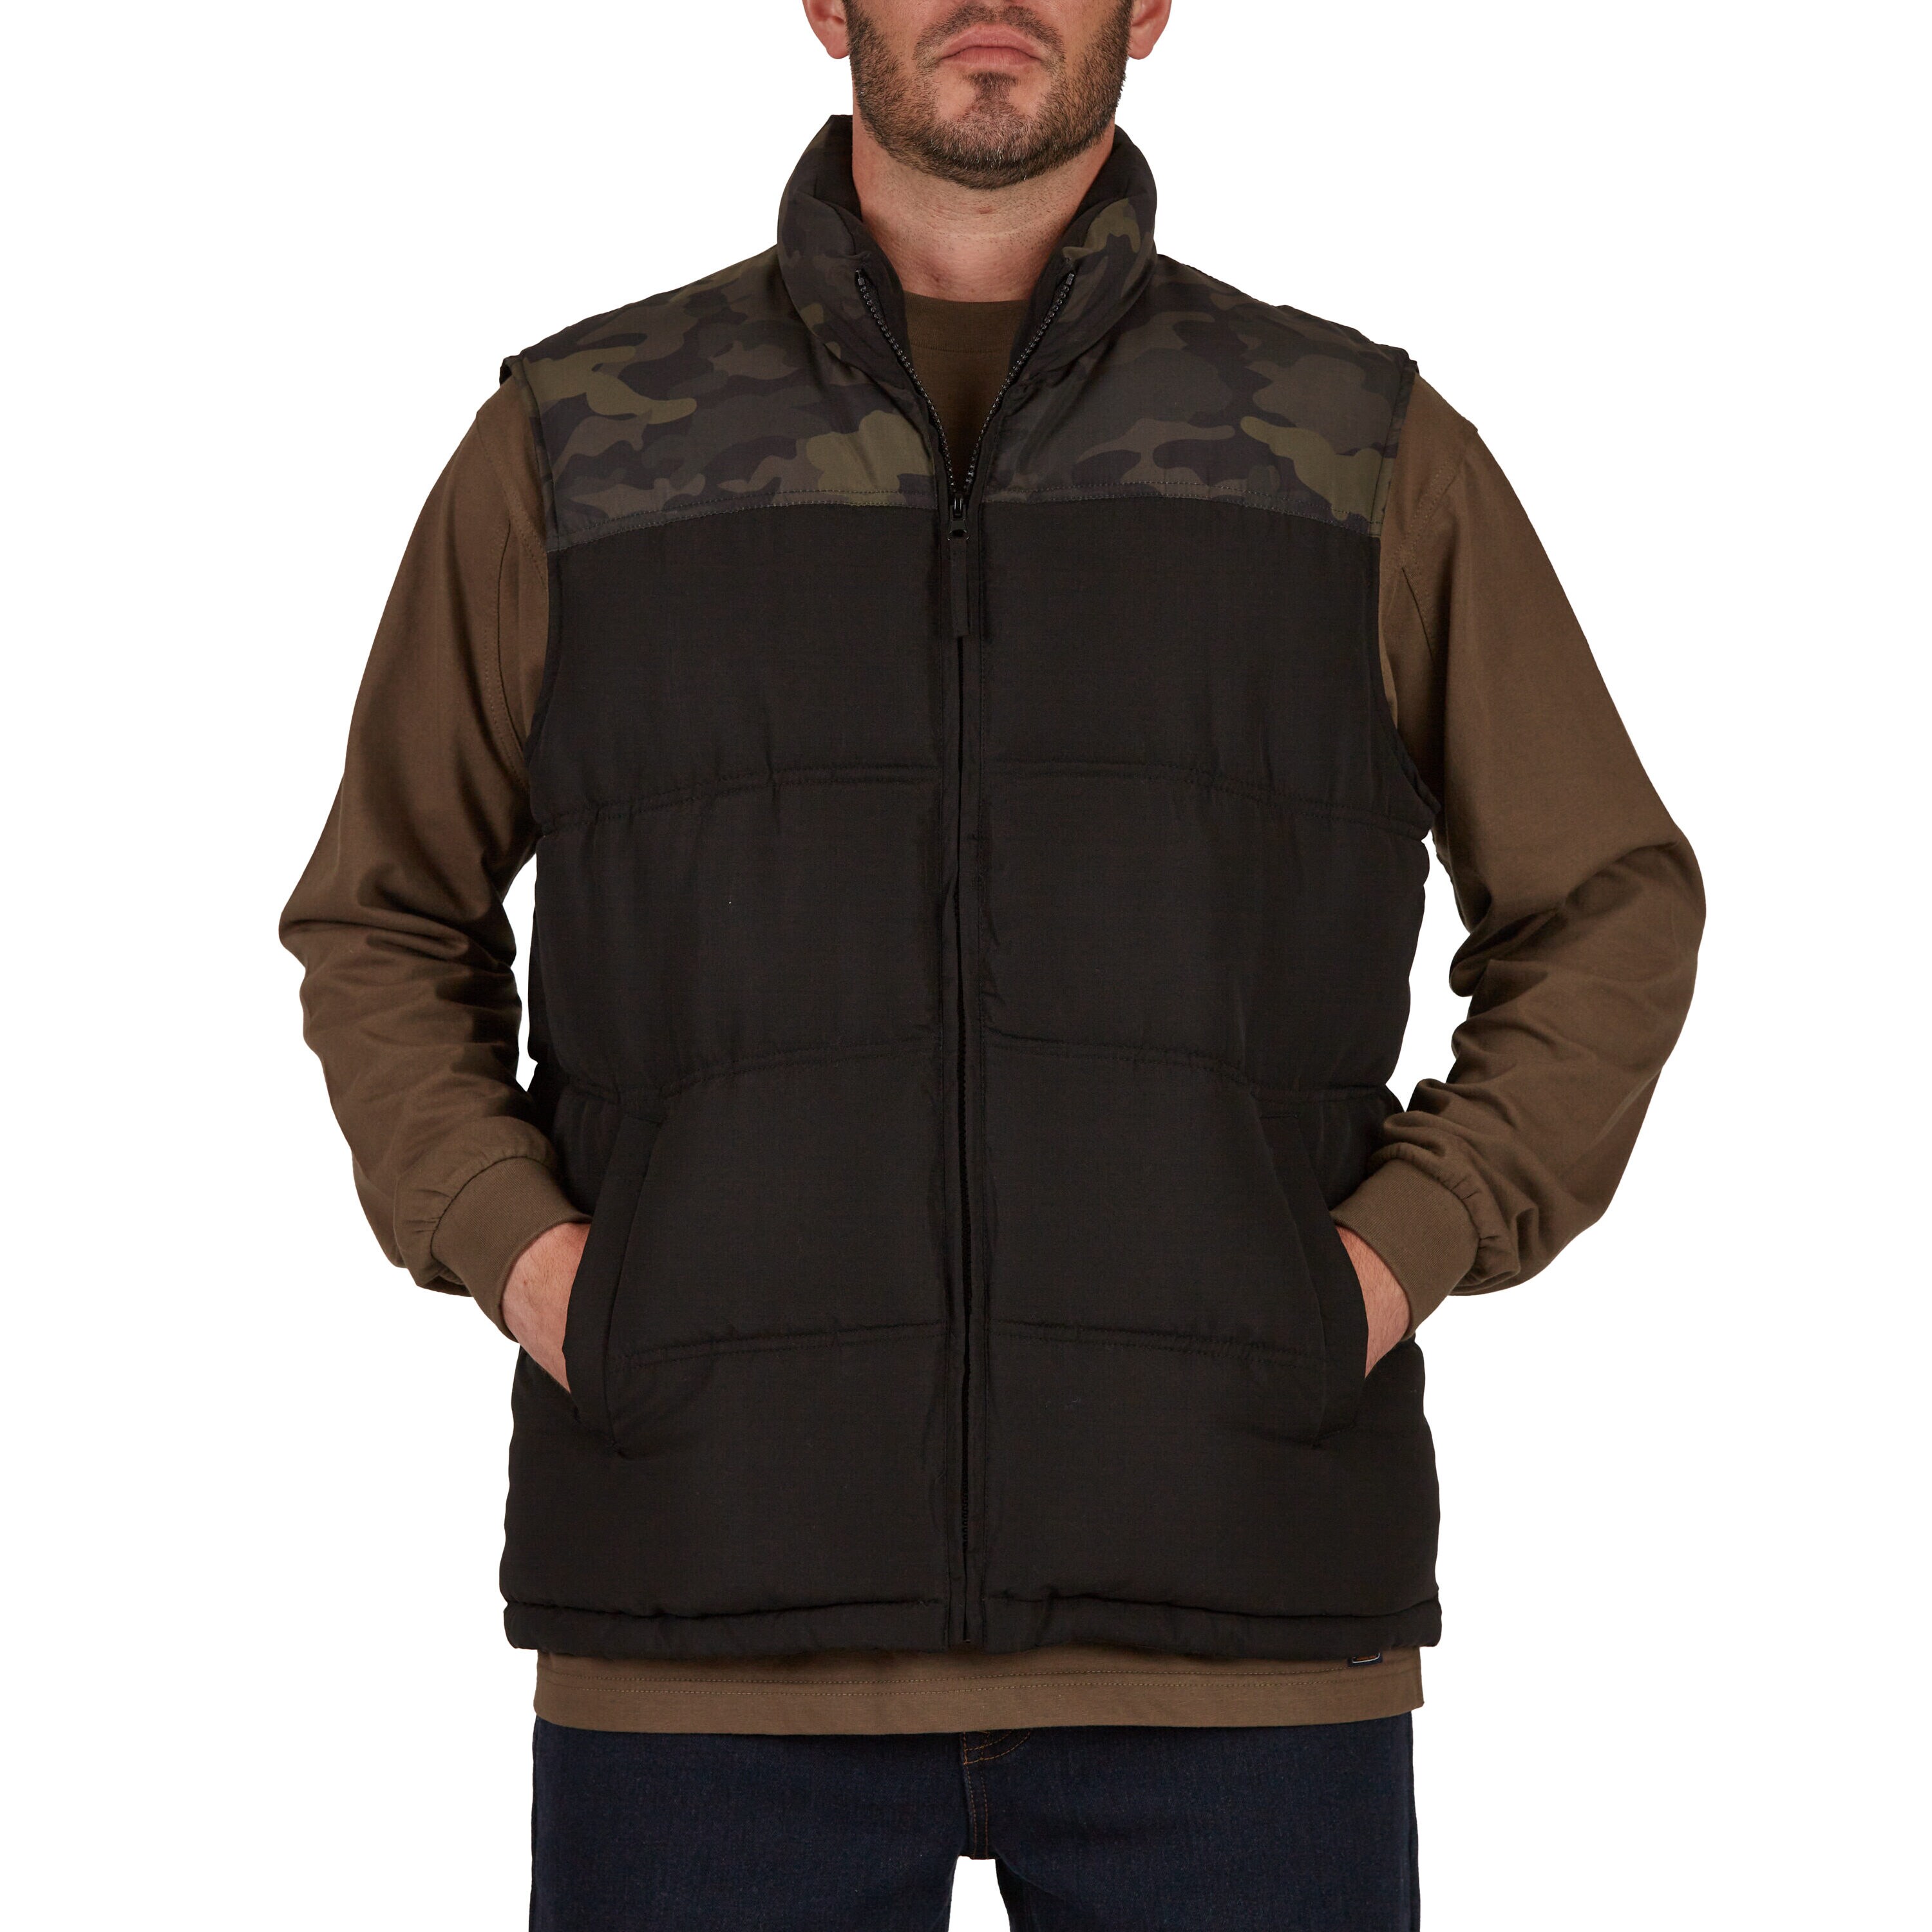 Modern Male Charcoal Camo Jacket - Lowes Menswear